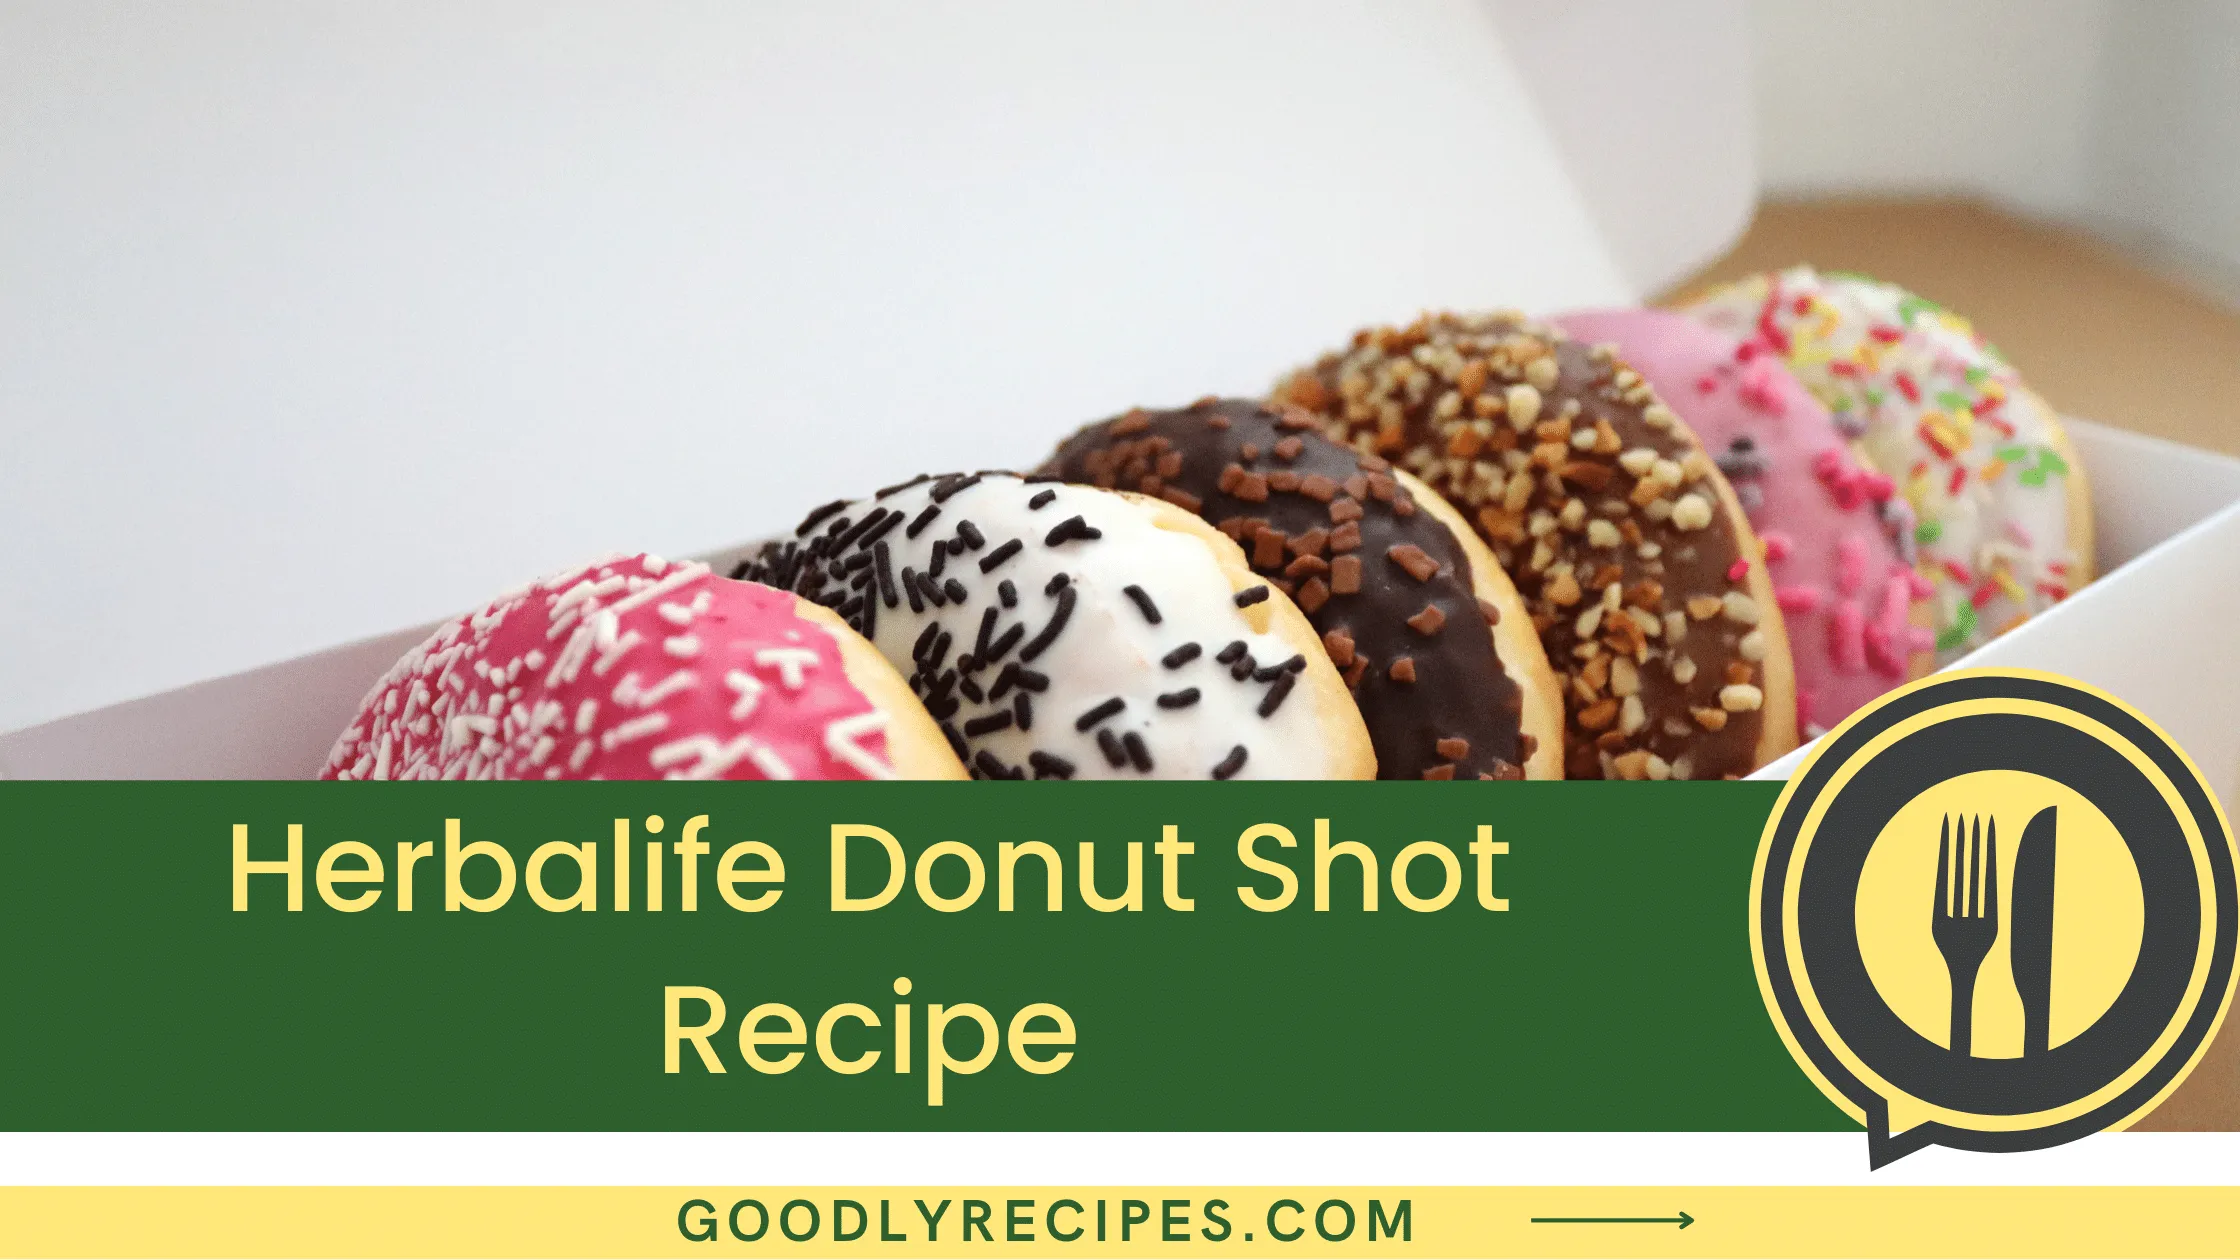 Herbalife Donut Shot Recipe - For Food Lovers